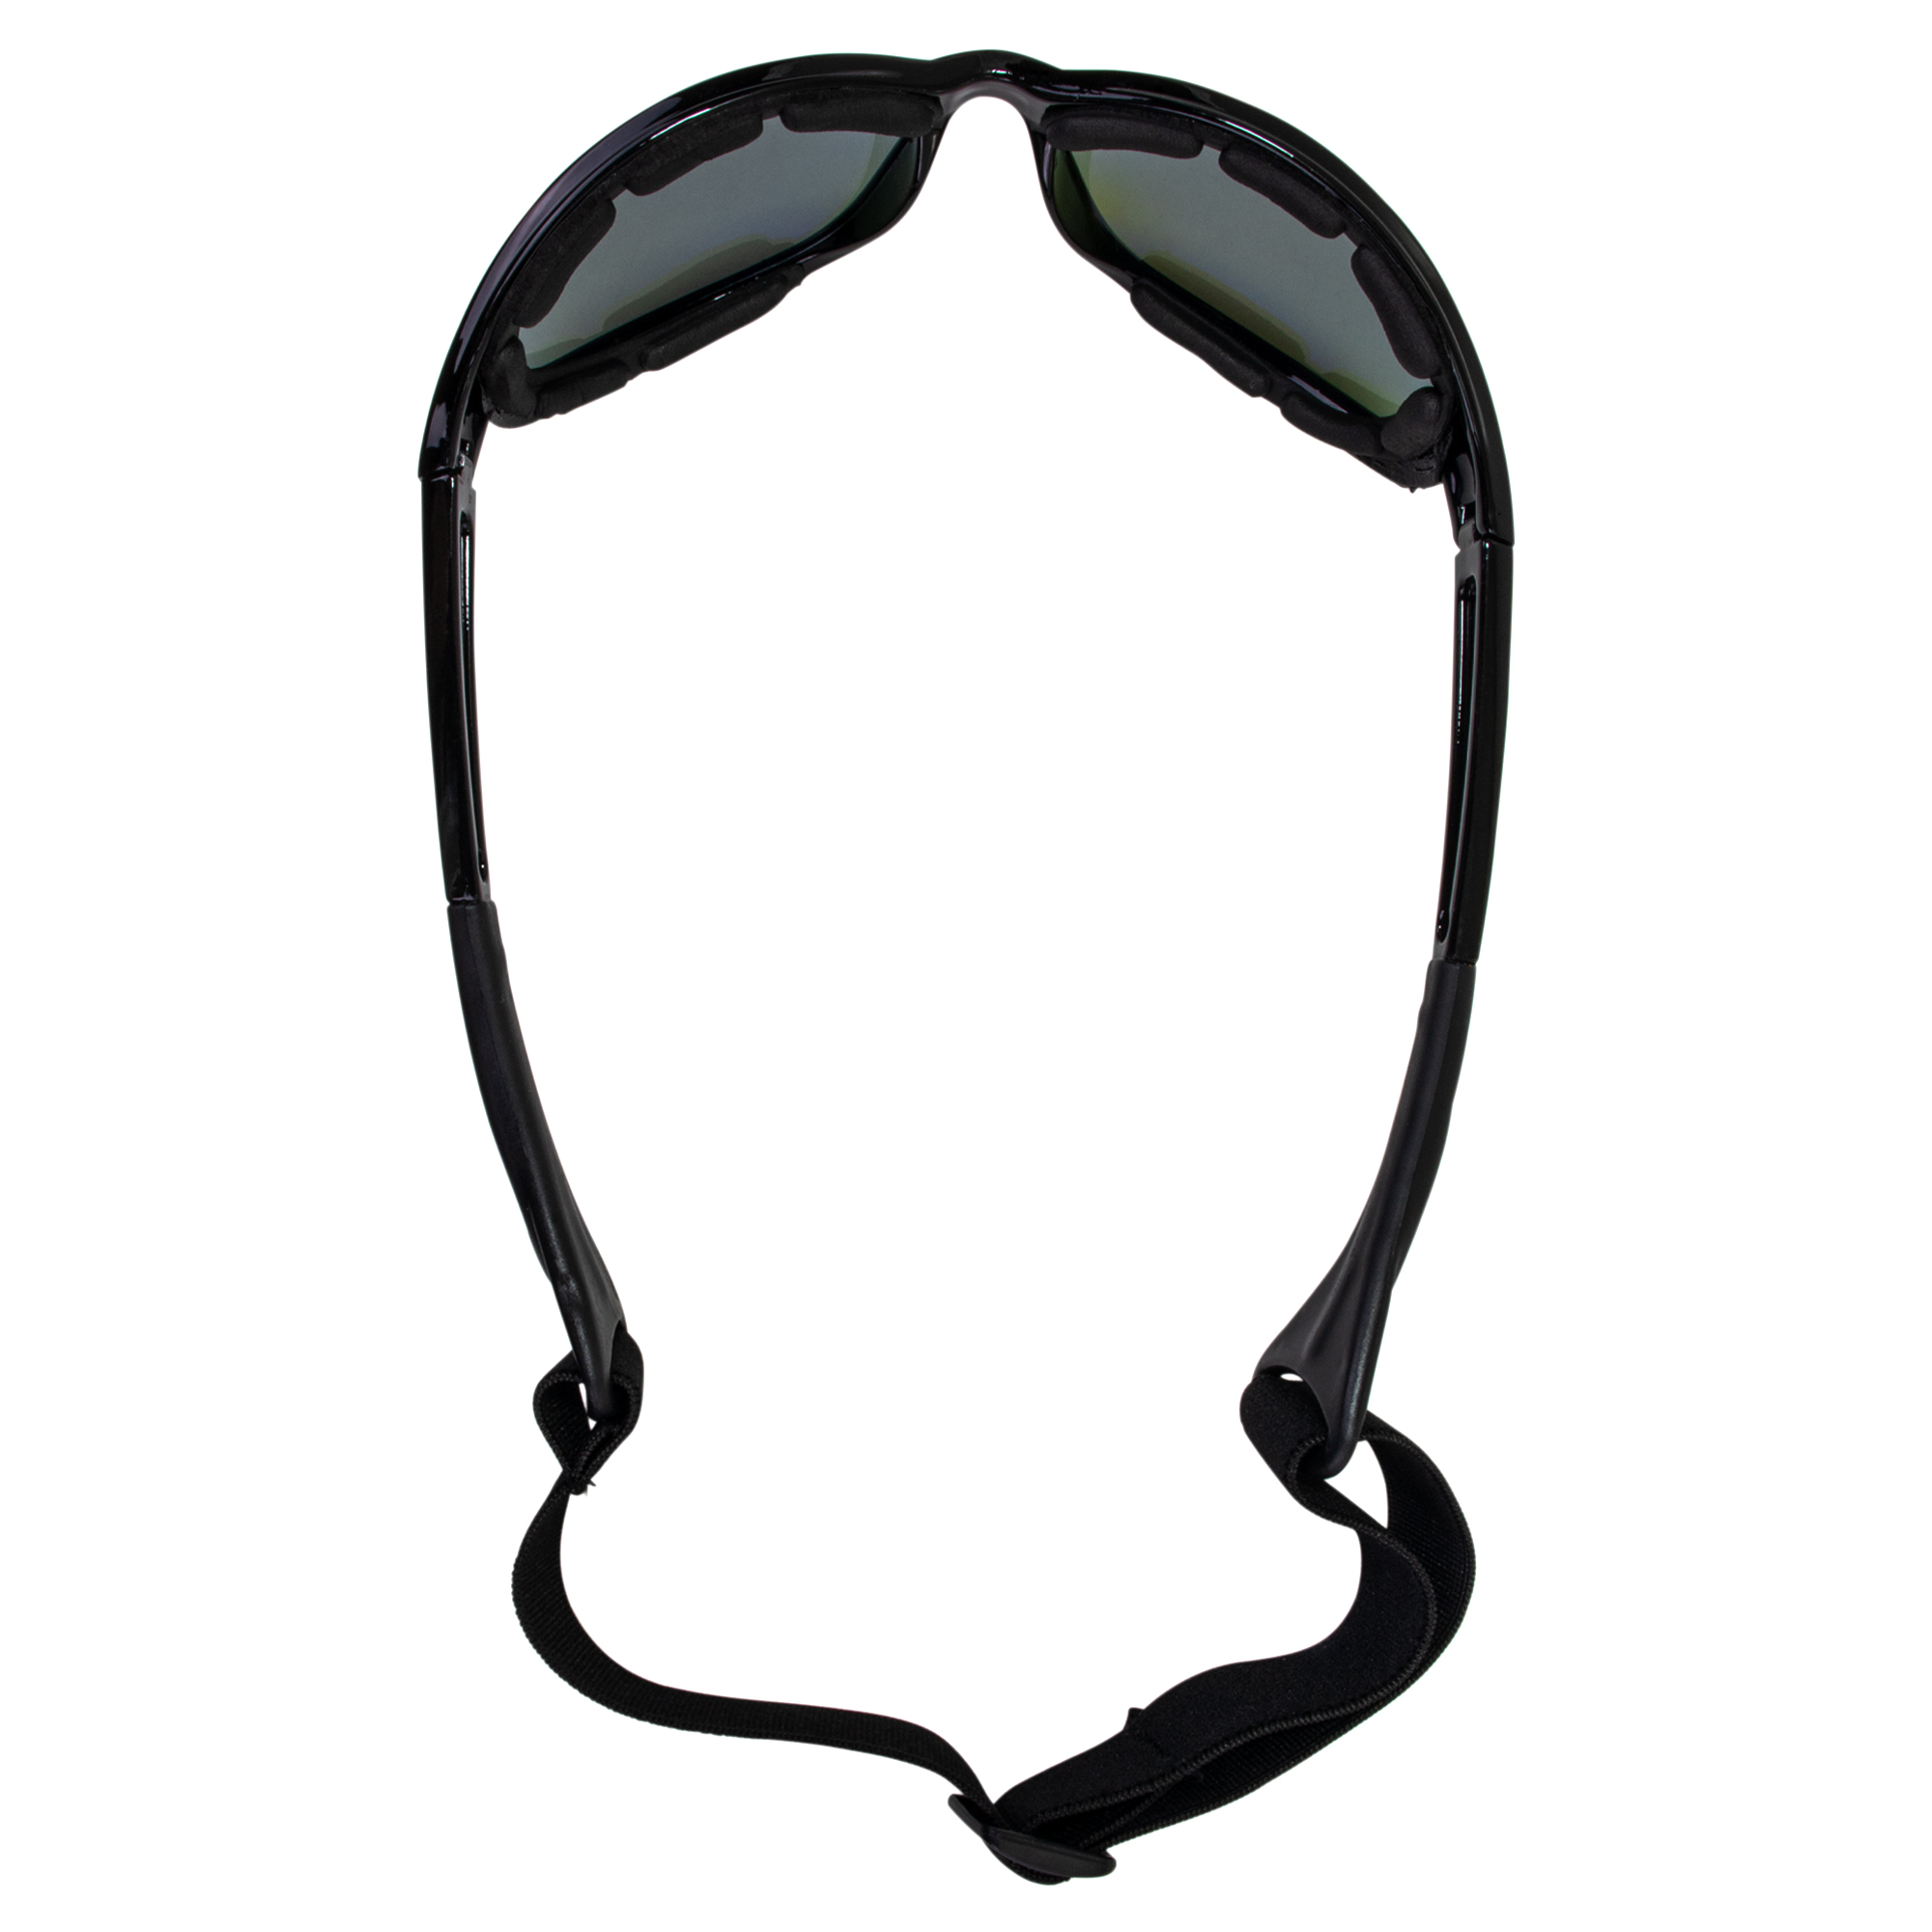 Birdz Eyewear Sail Padded Jetski Sunglasses Goggles Polarized Sports Watersports Boating Fishing for Men or Women Black Frame w/Blue Mirror Lens - image 4 of 6